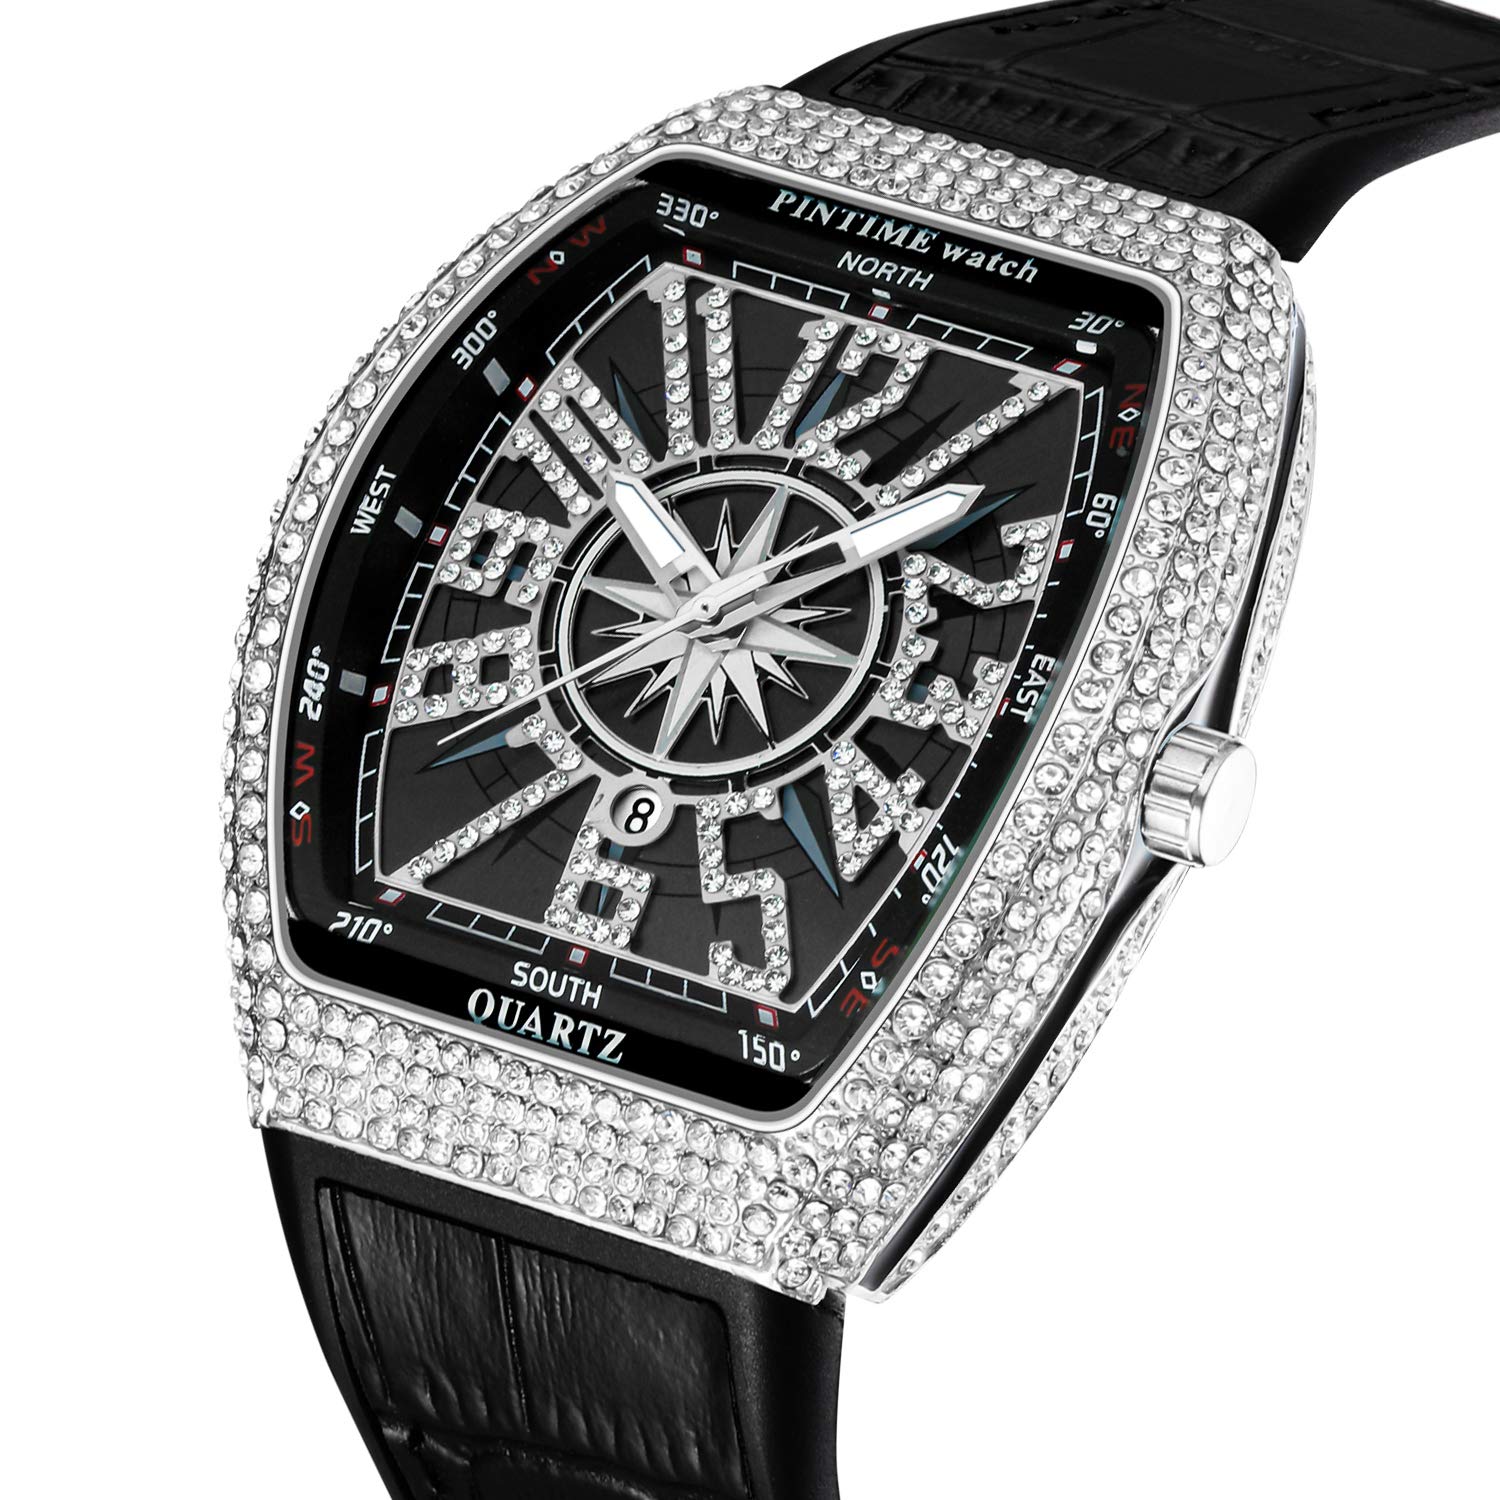 PINTIME Luxury Men's Crystal Diamond Watch Tonneau Fashion Bling Iced Out Waterproof Quartz Analog Watch for Men Leather Strap Hip Hop Rapper